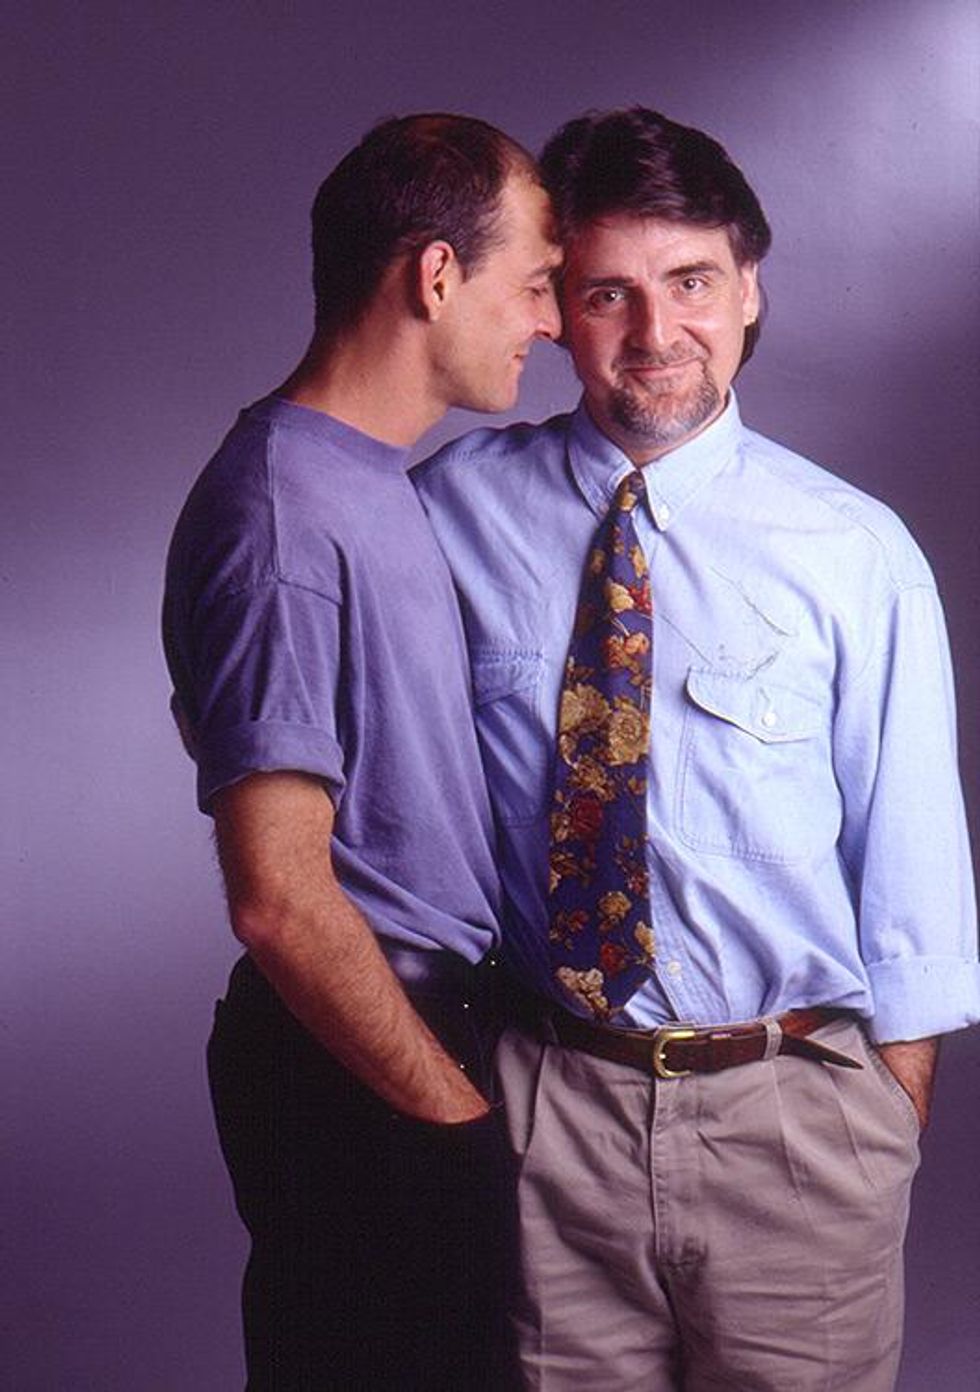 1994 Pinkosh (left) Hamilton (right) by r.r. jones